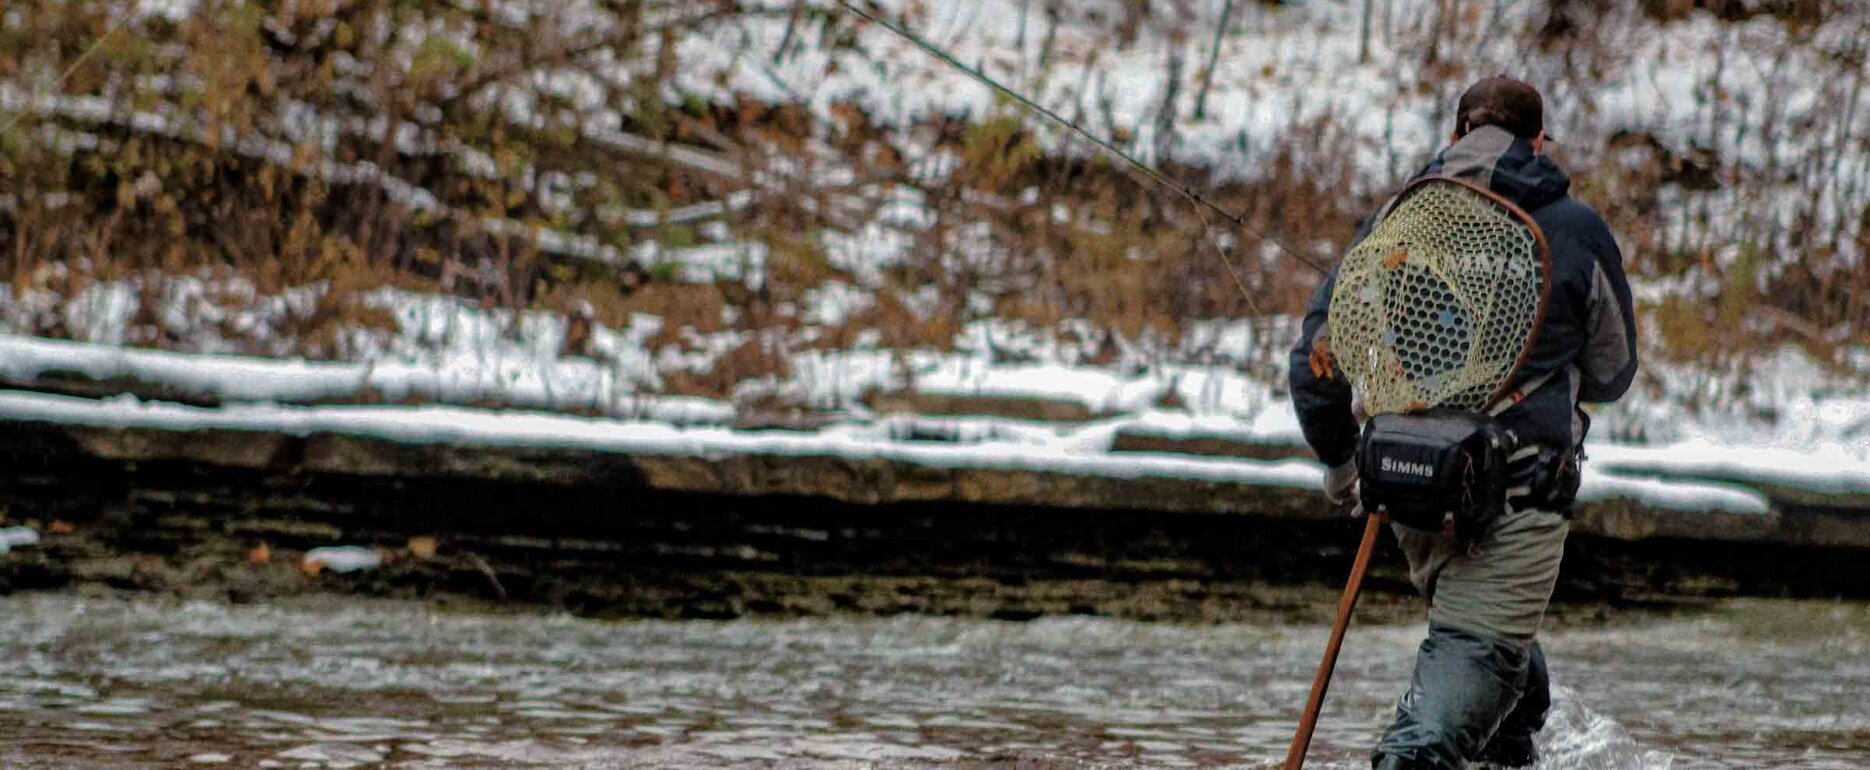 Steelhead fishing in Pennsylvania - Strung Magazine is tied to nature